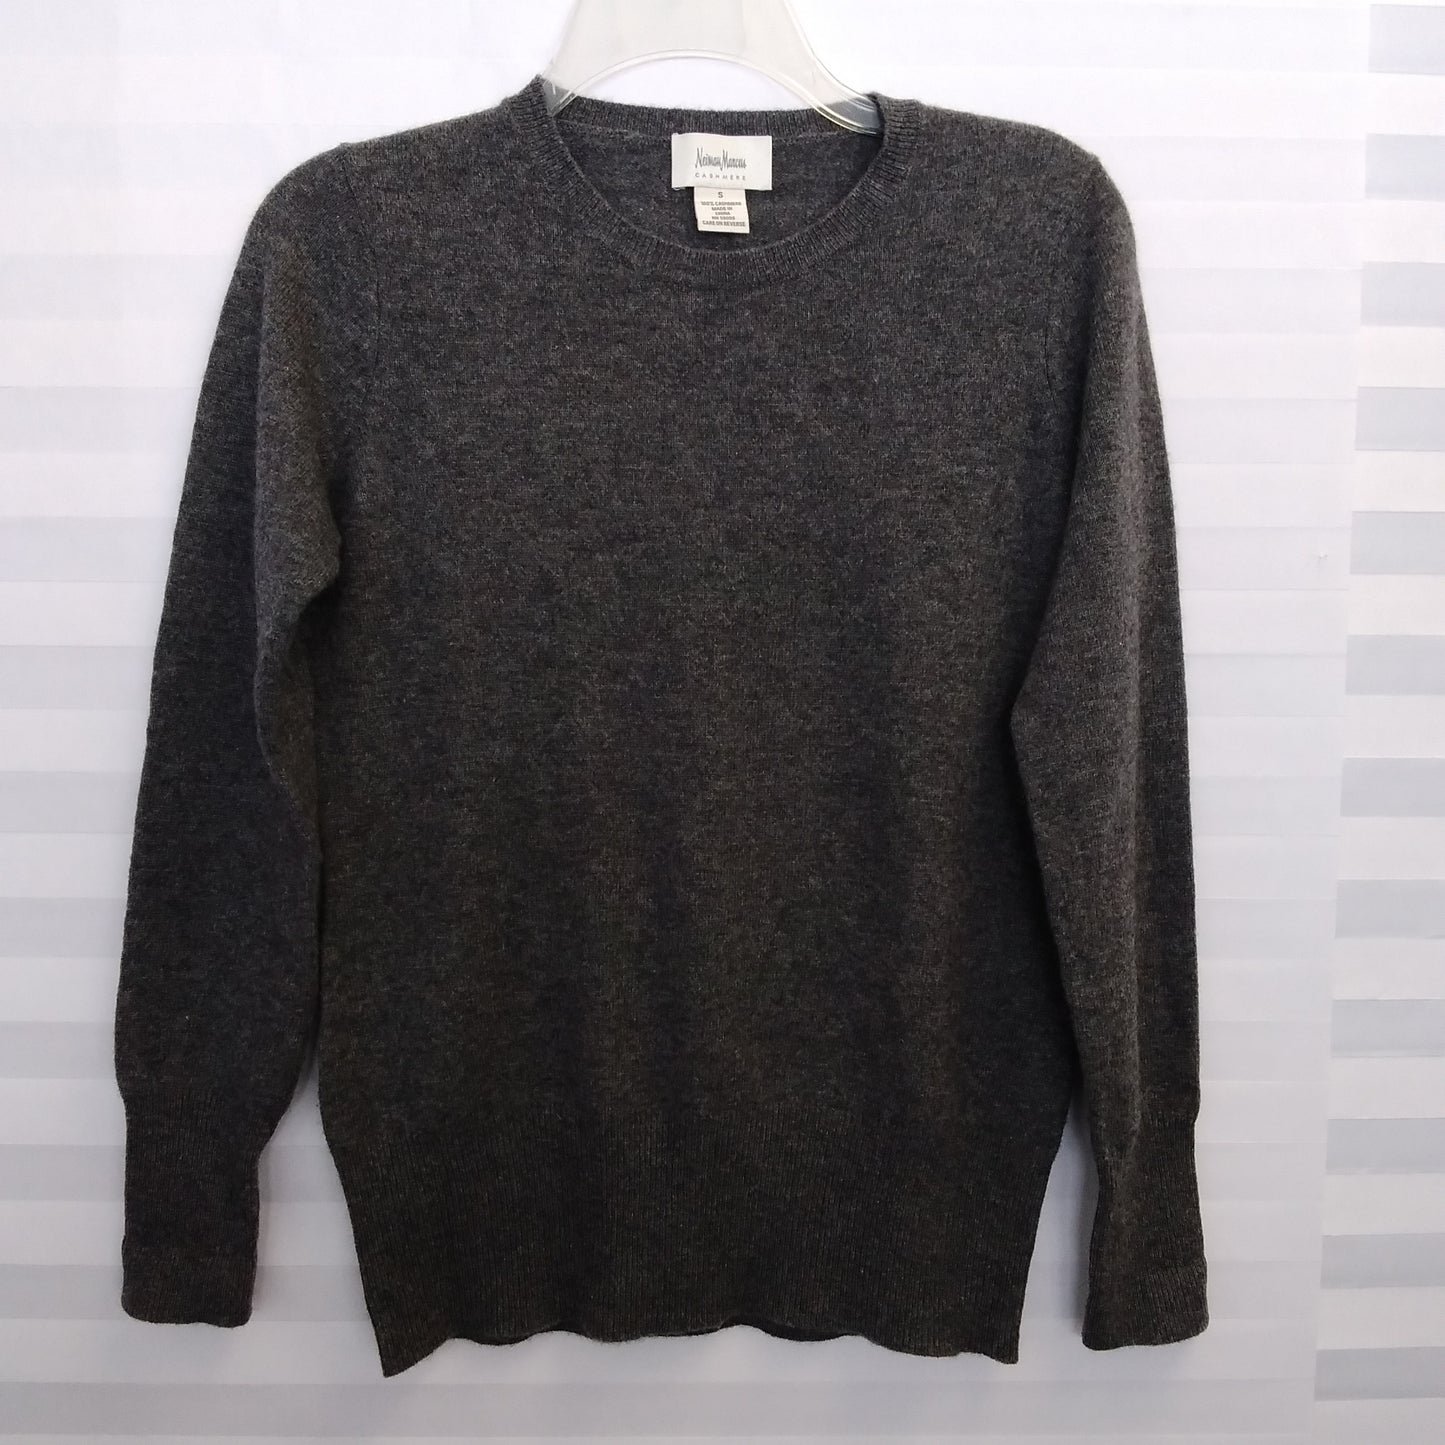 Neiman Marcus Cashmere Women's Gray Cashmere Sweater - Size S